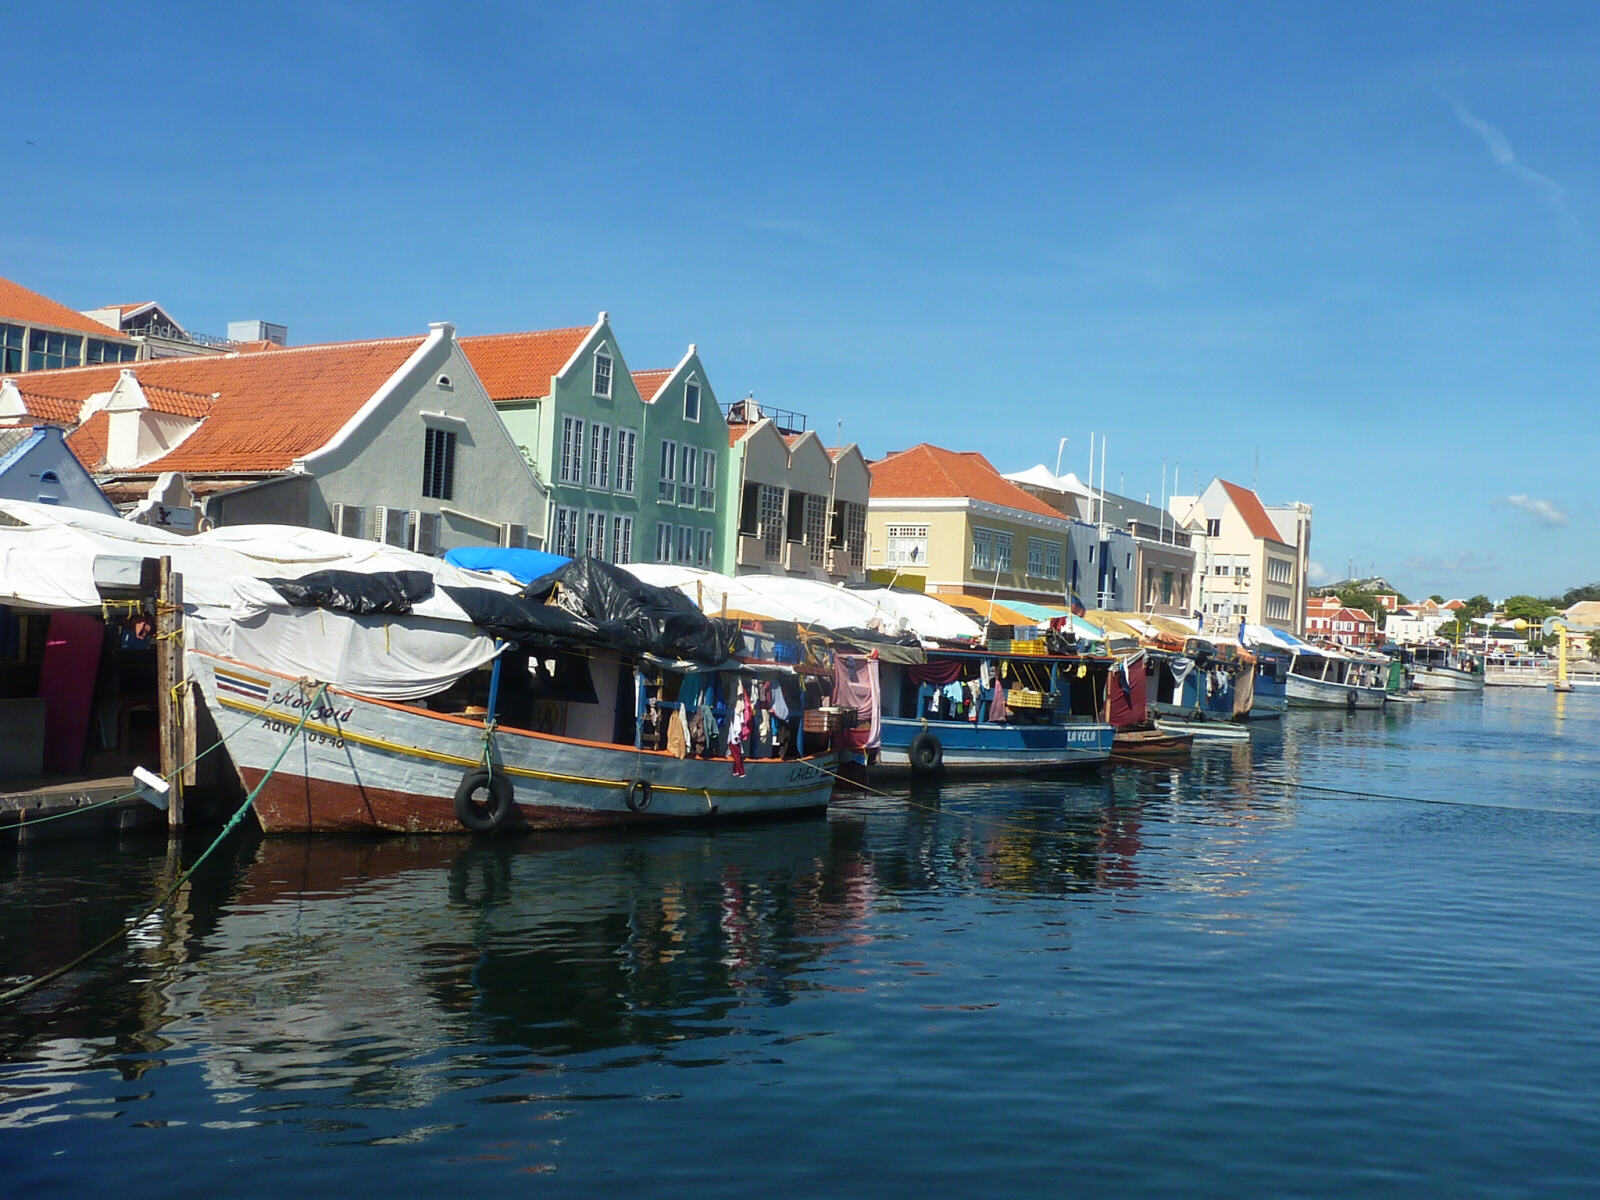 The Venezuelan floating market in Willemstad, Curacao